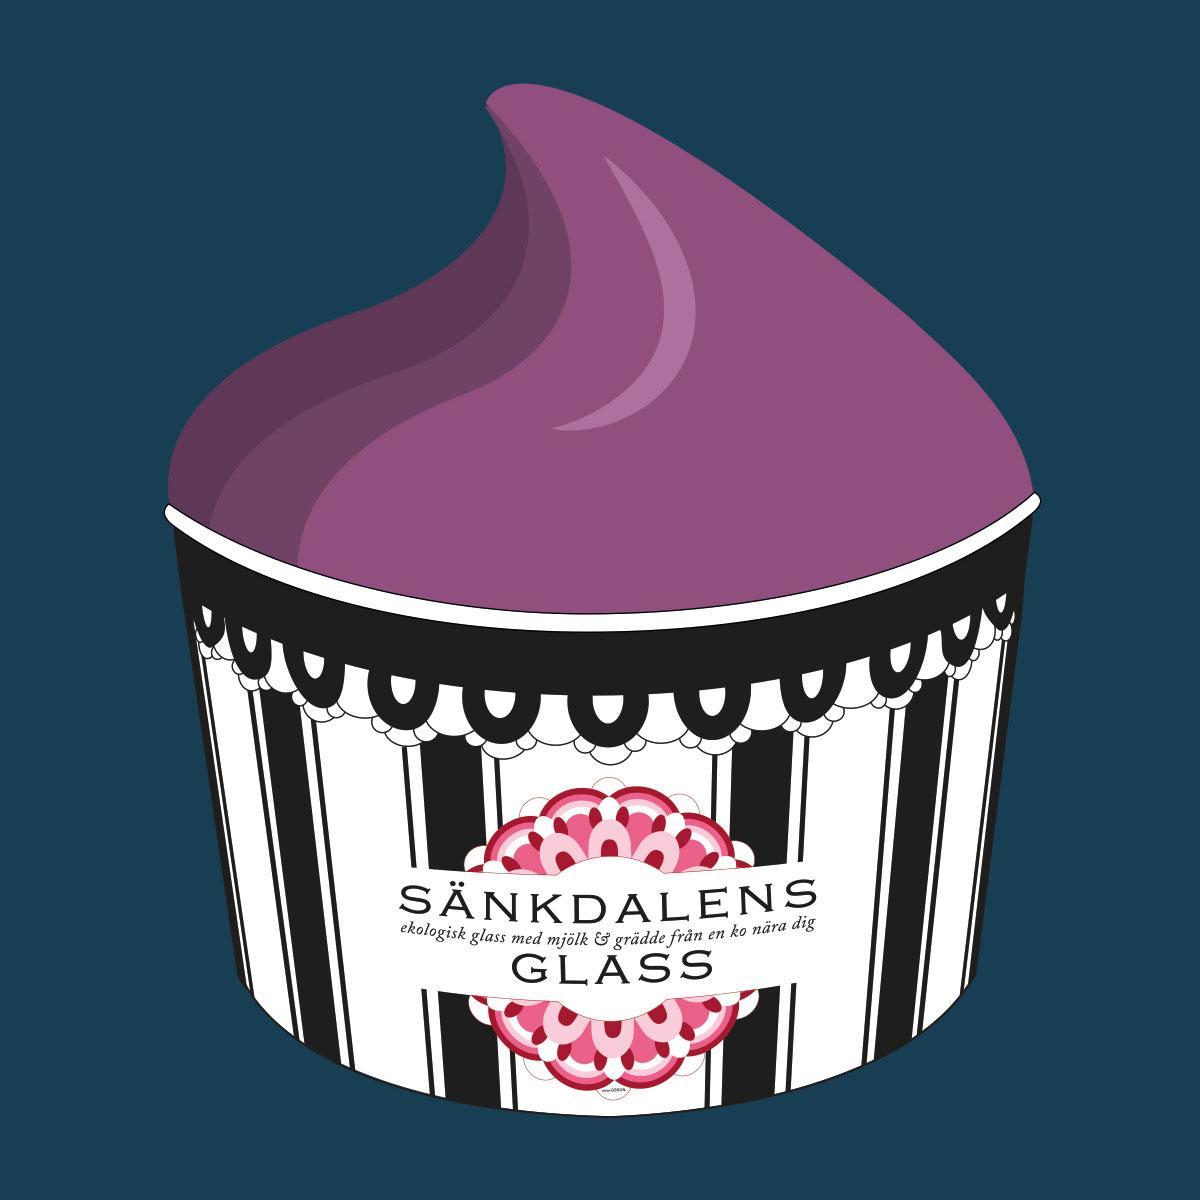 Sänkdalens glass'' Blueberry ice cream '